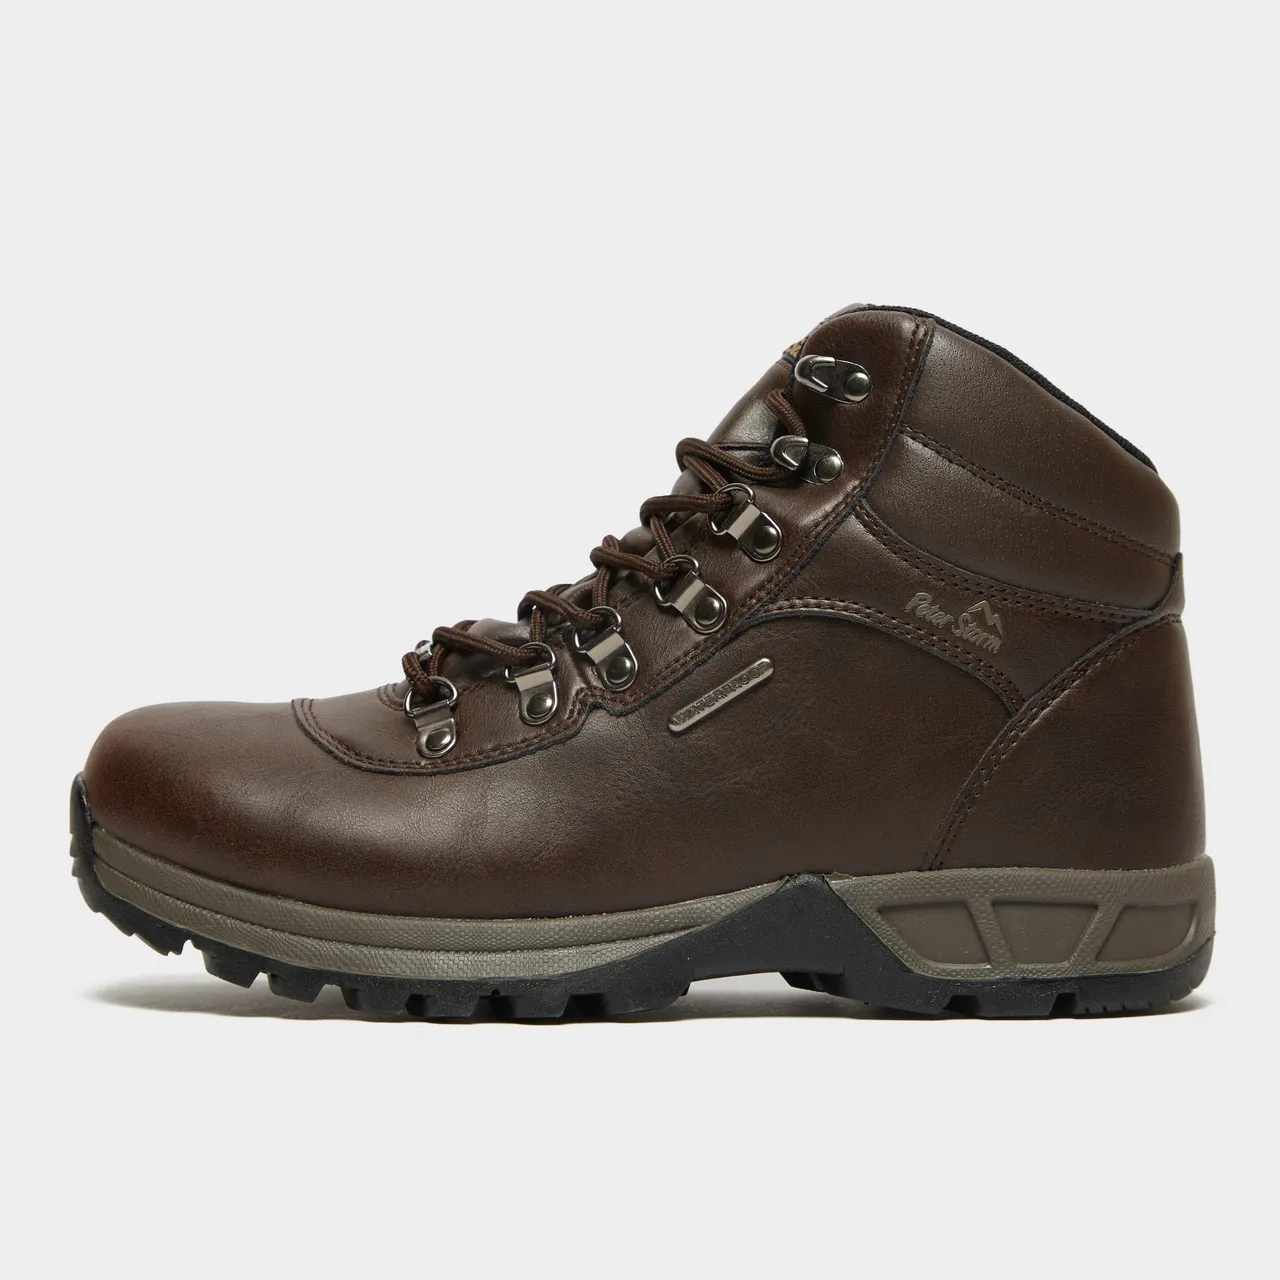 Men's Rivelin Walking Boots - Brown, Brown